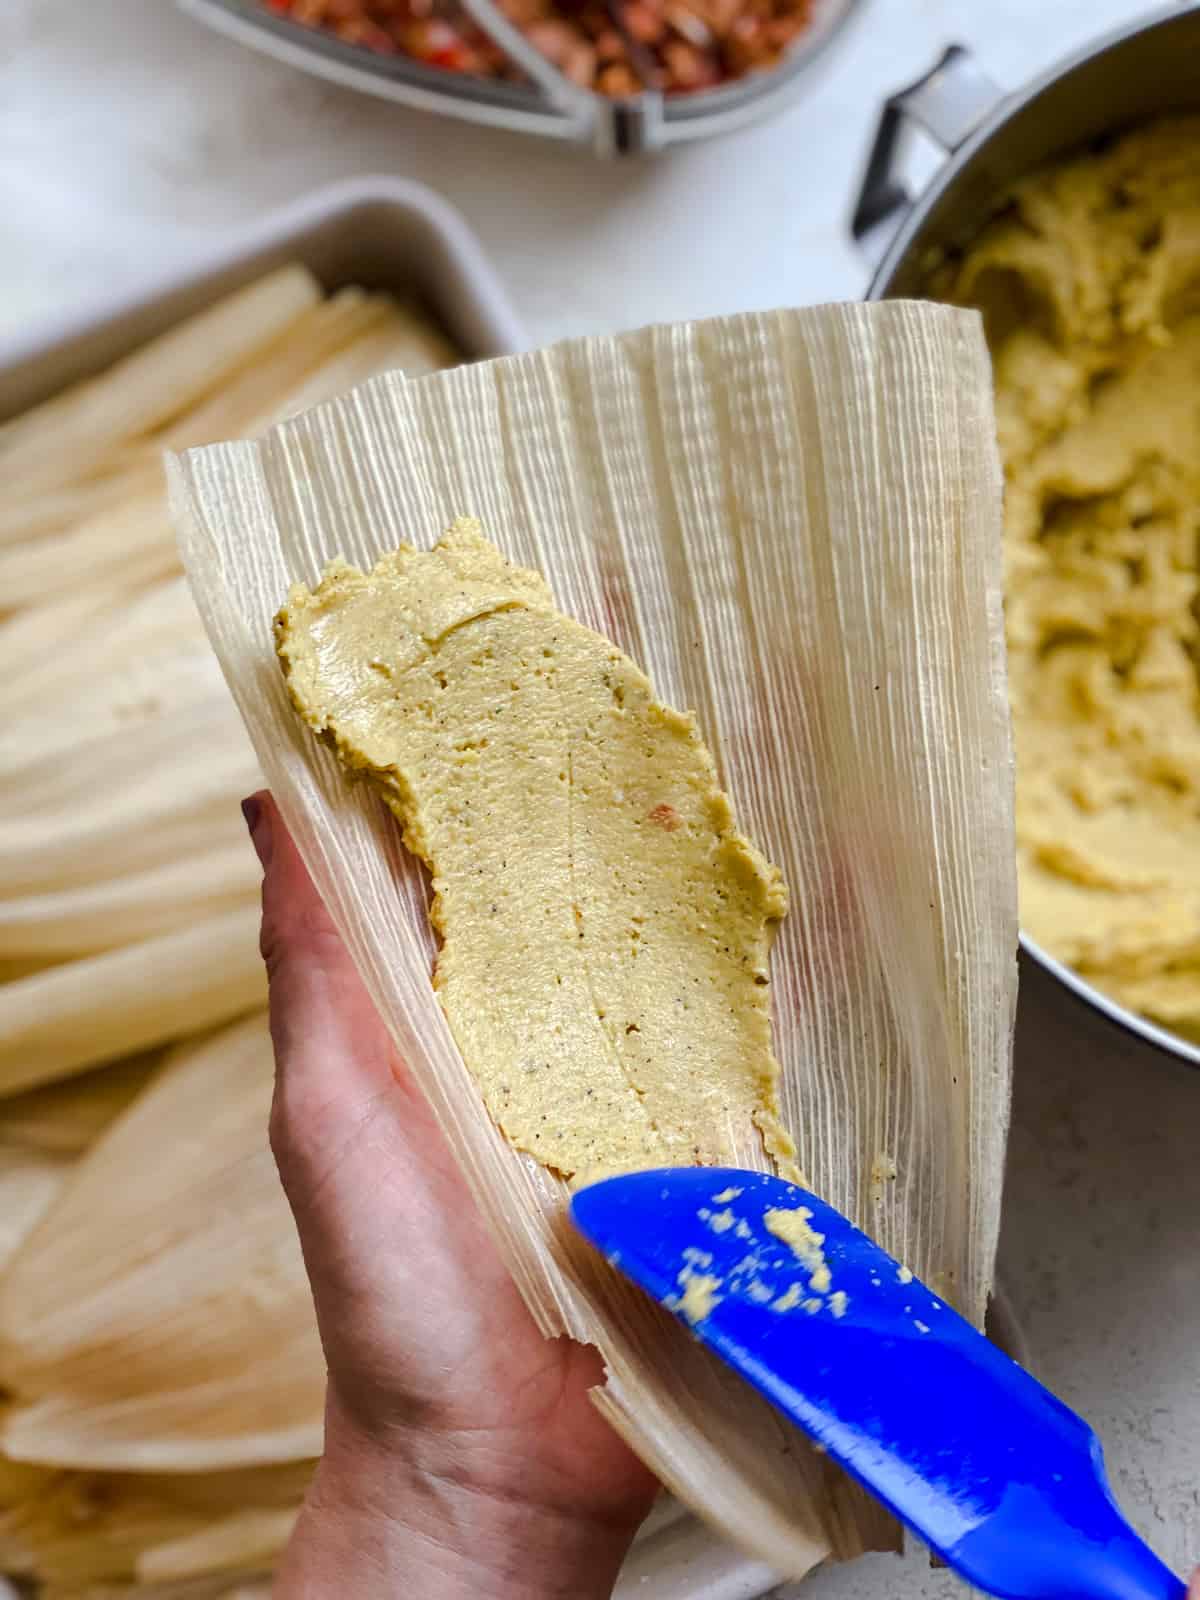 process shot of spreading tamales filling mixture into corn husk